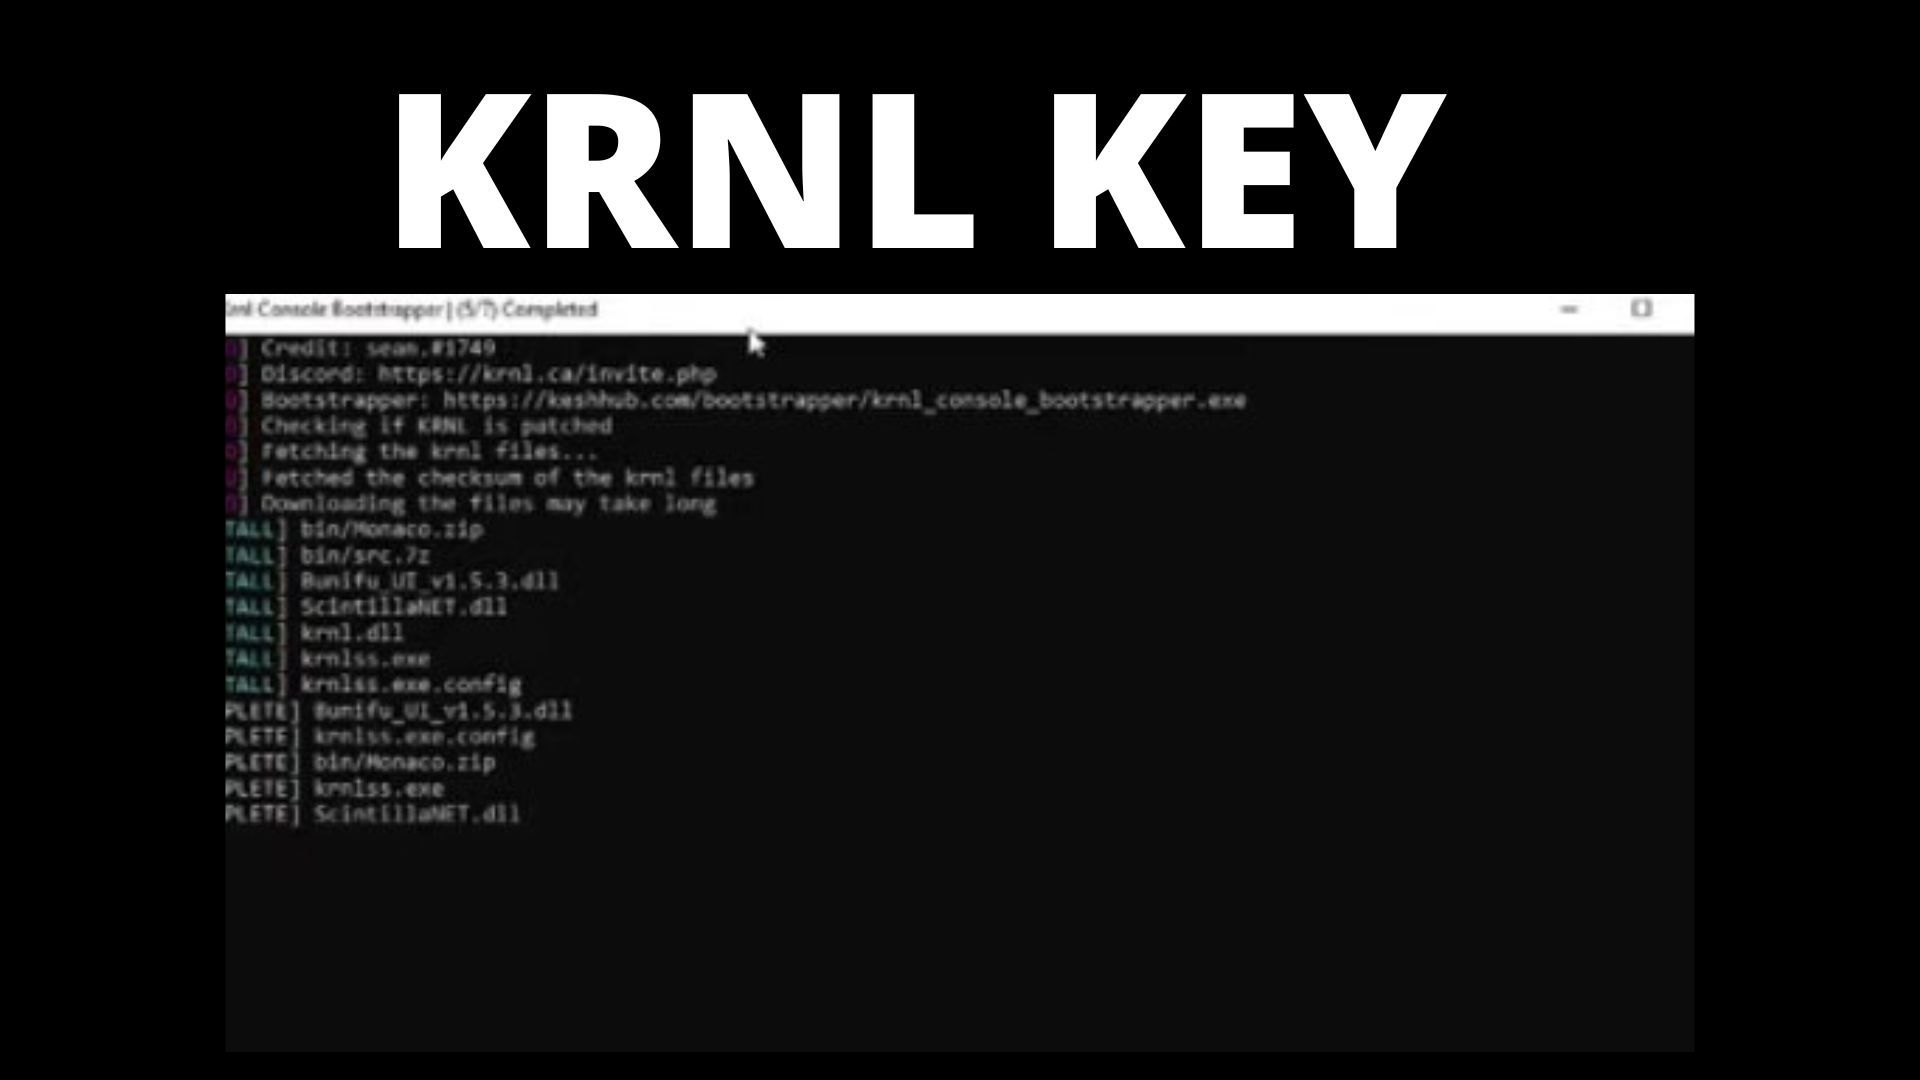 What is KRNL key?